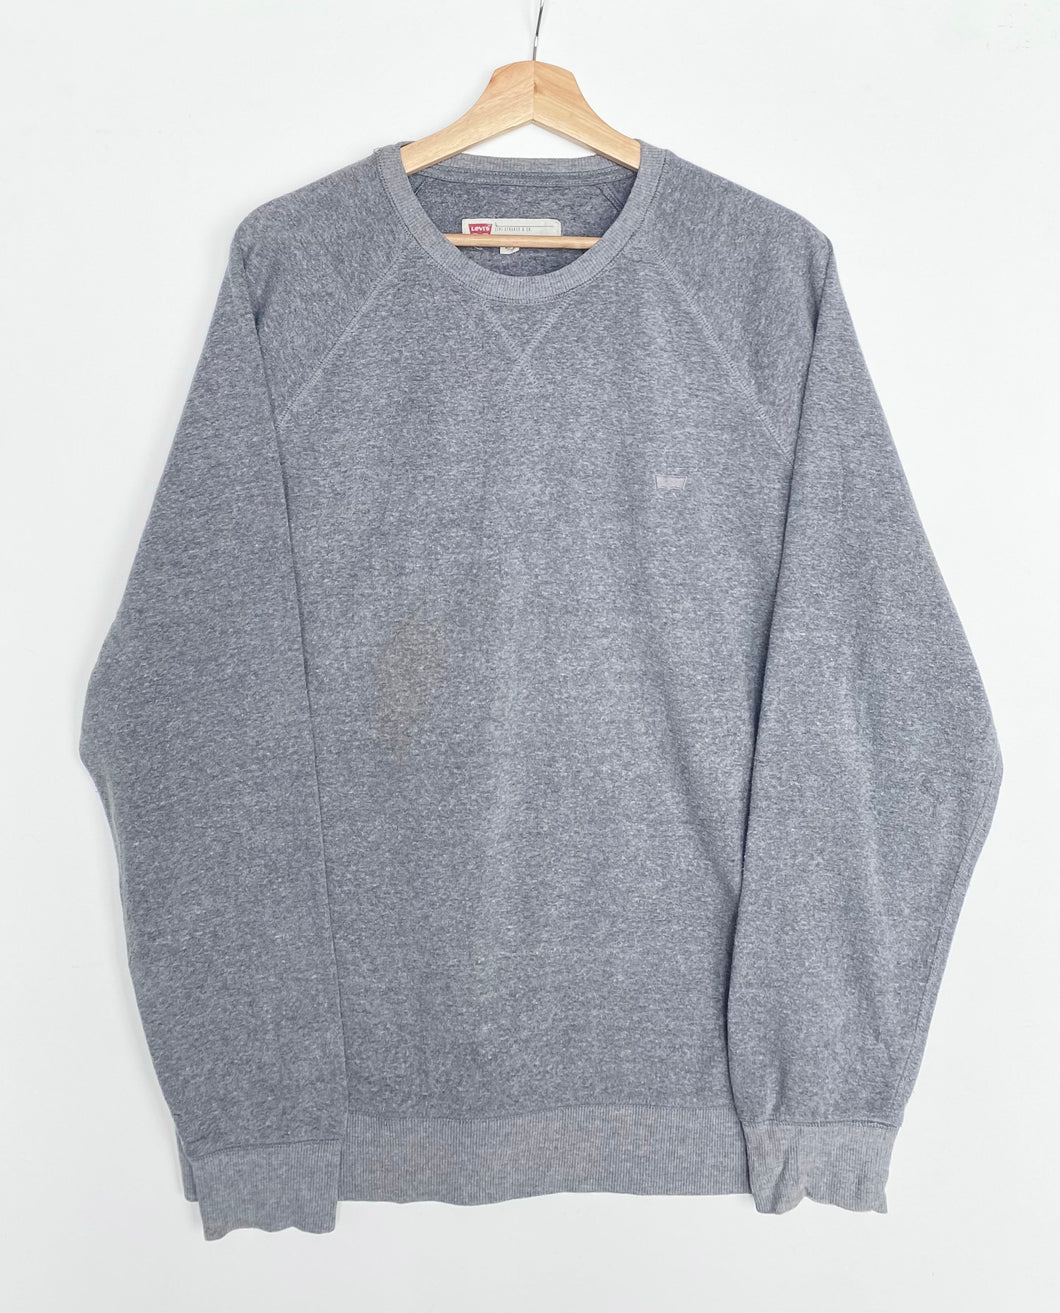 Levi’s sweatshirt (L)